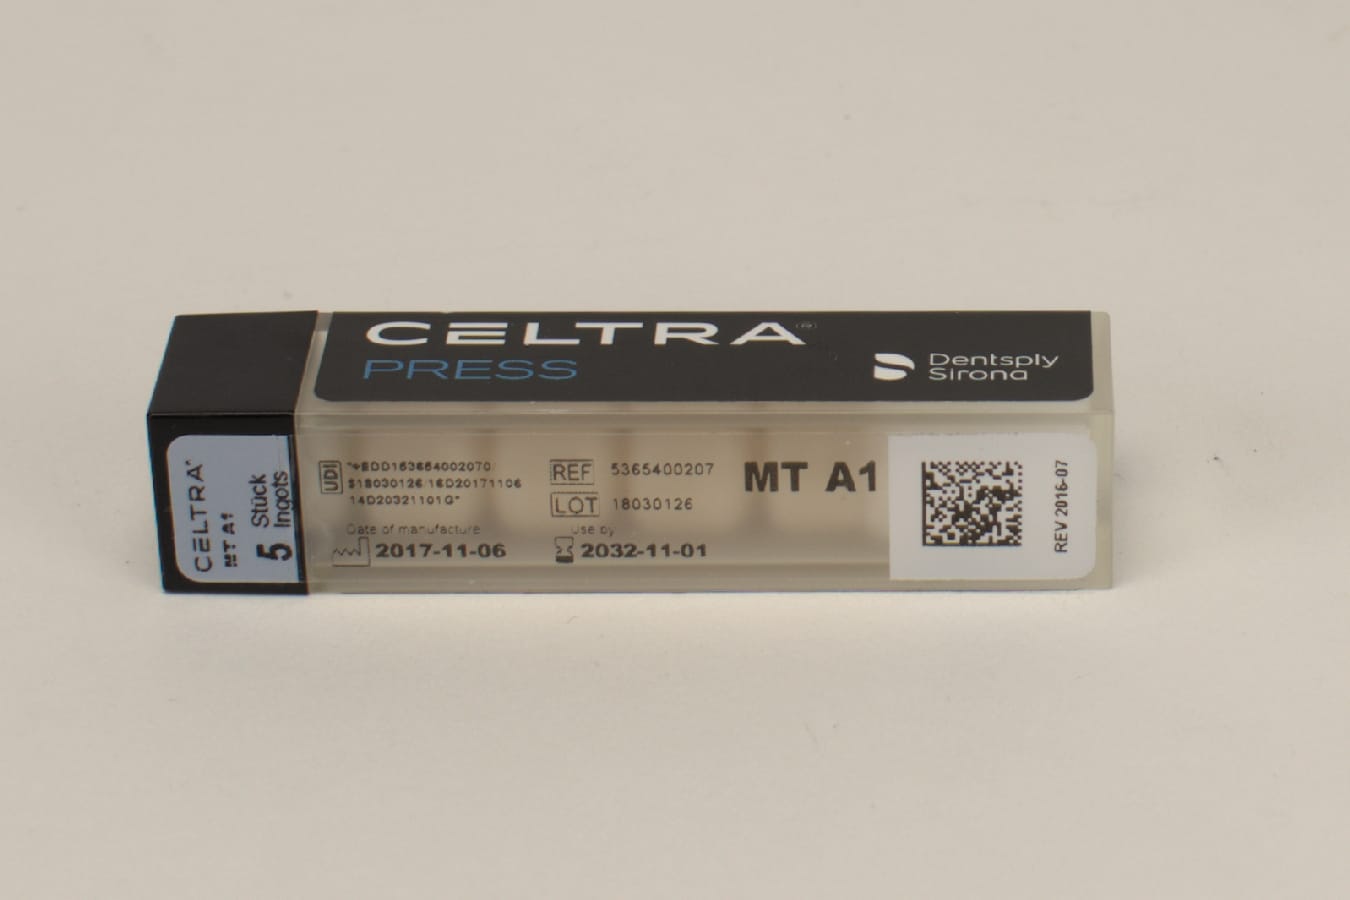 CELTRA PRESS MT A1 5x3g 